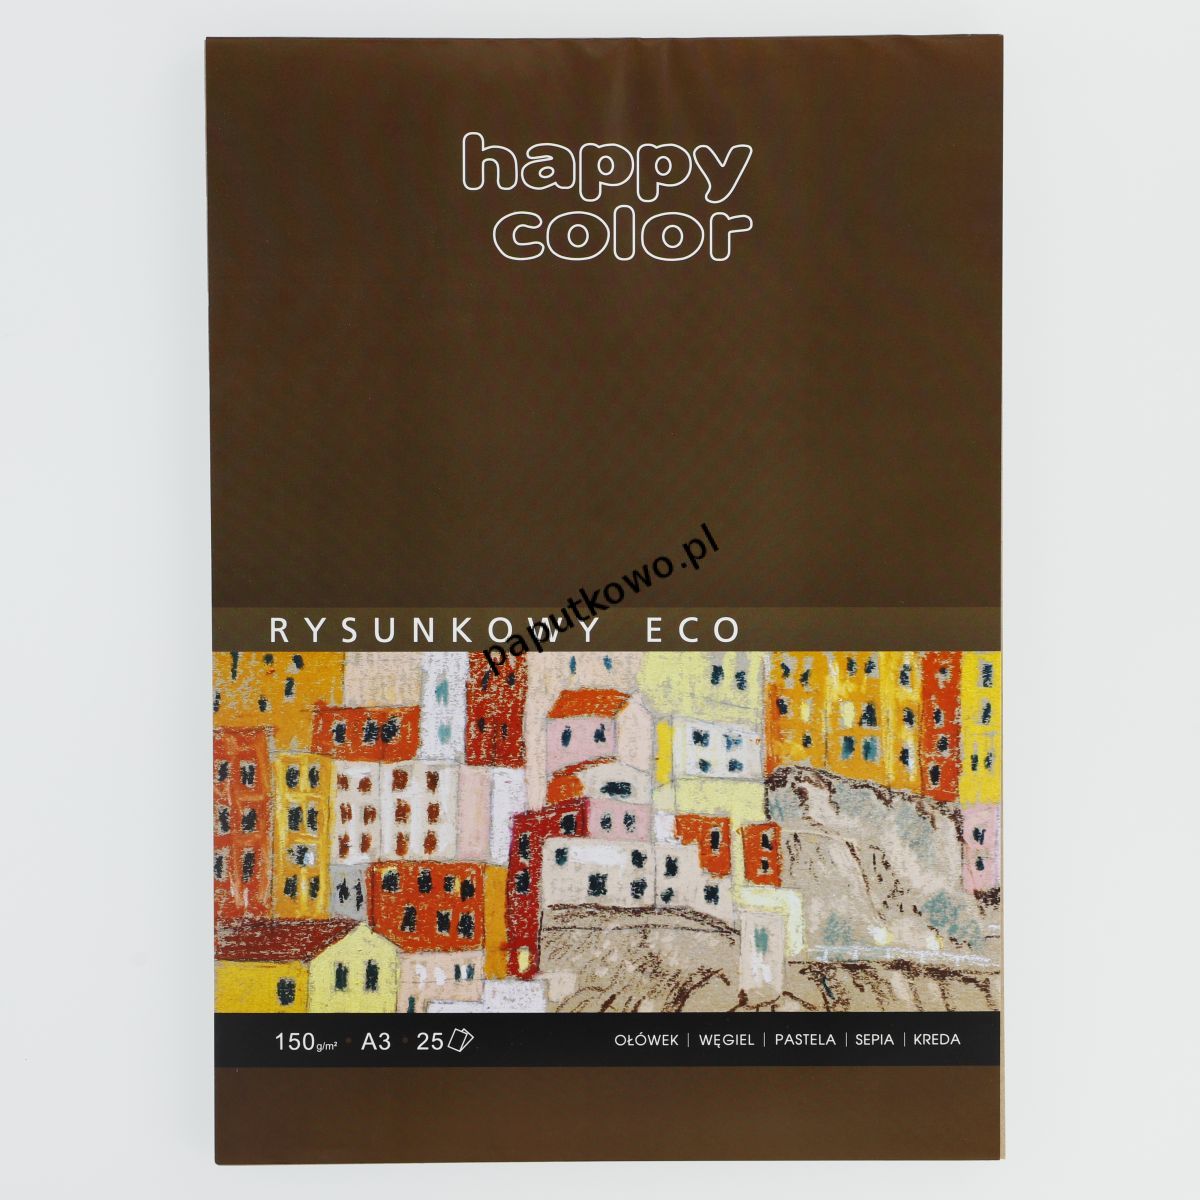 Blok rysunkowy Gdd Happy Color rysunkowy eko młody artysta A3 150g 25k (HA 3715 3040 A25) 1